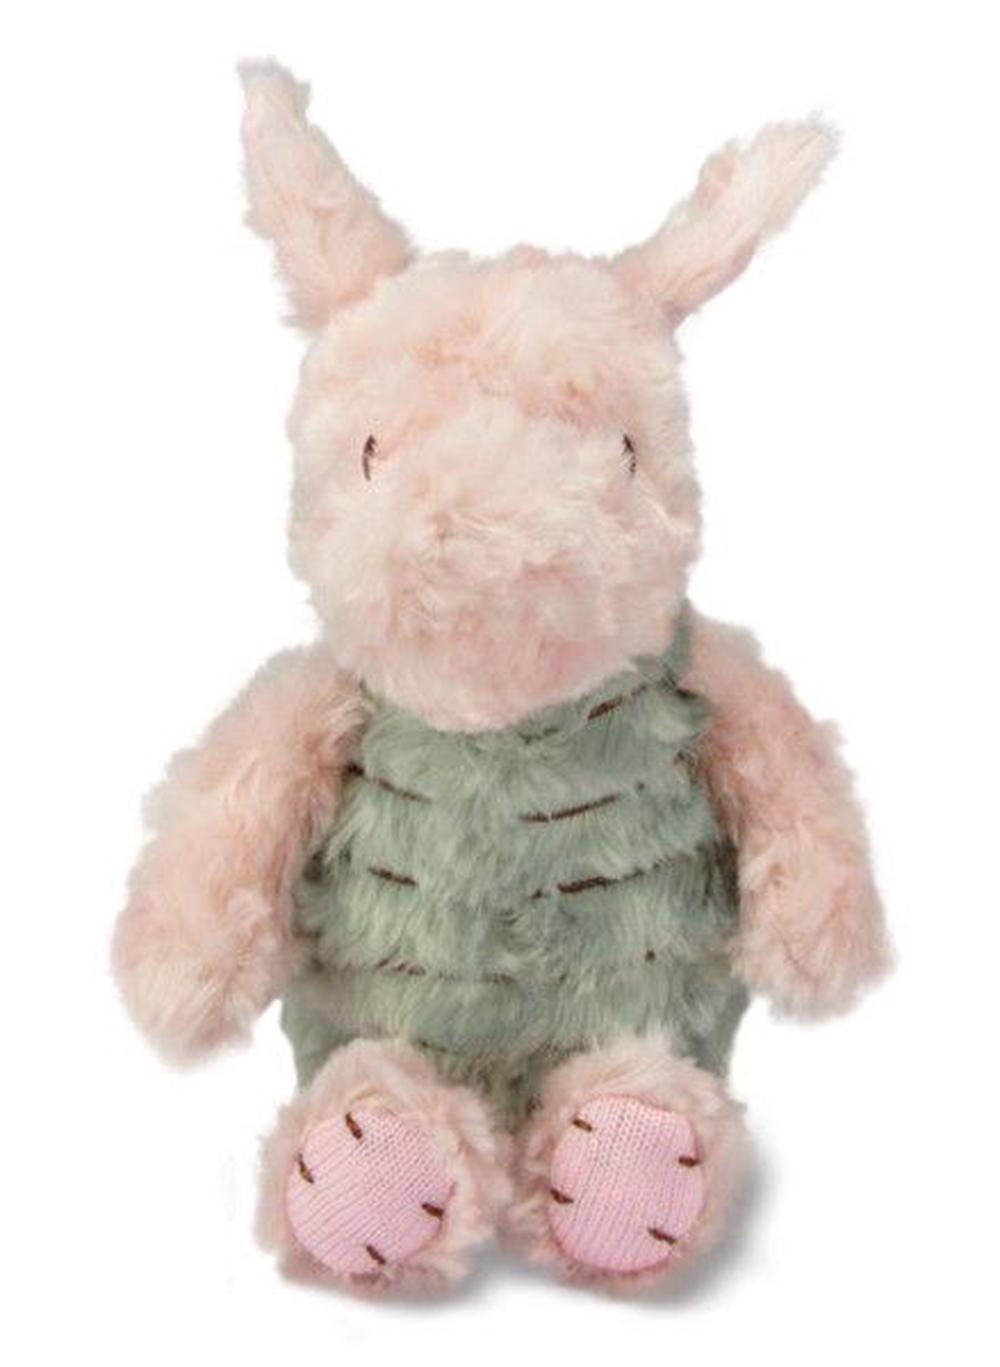 classic piglet stuffed animal